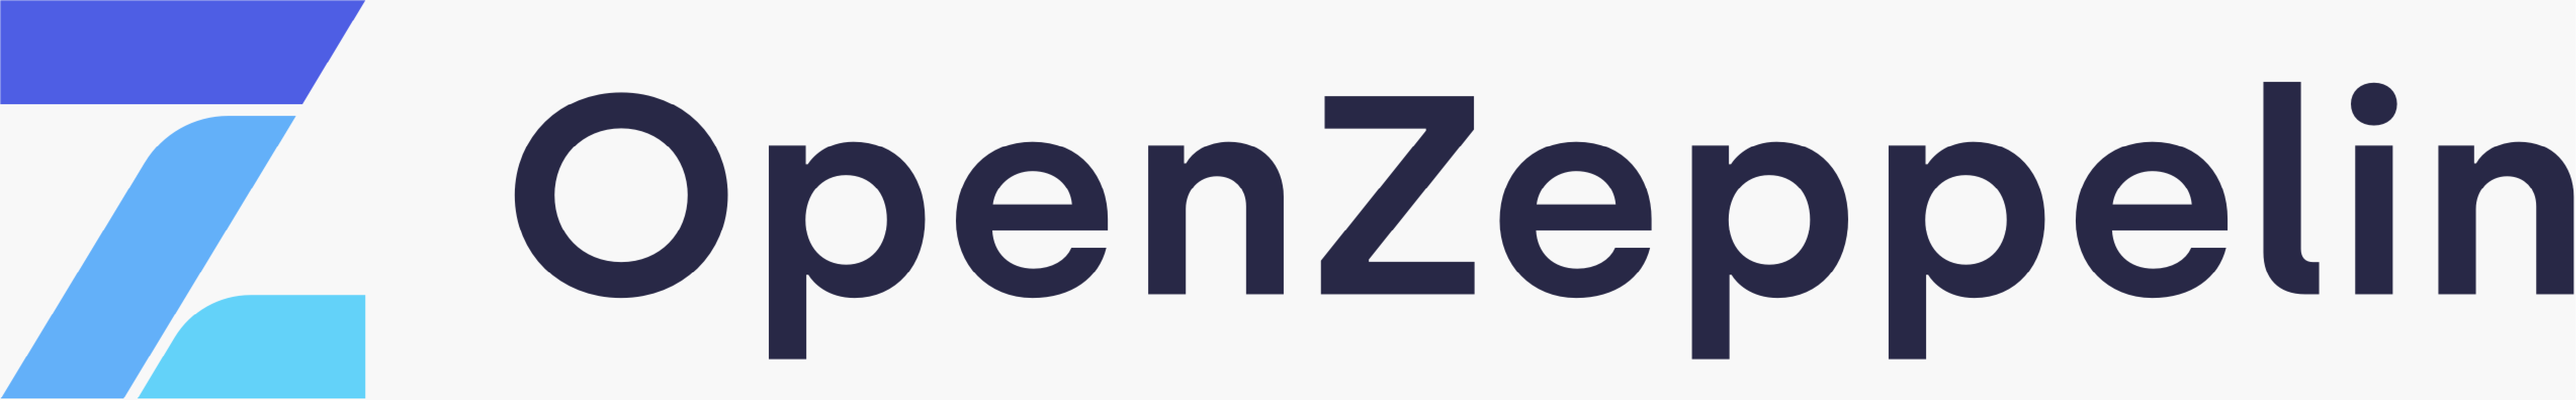 OpenZeppelin Audit Logo